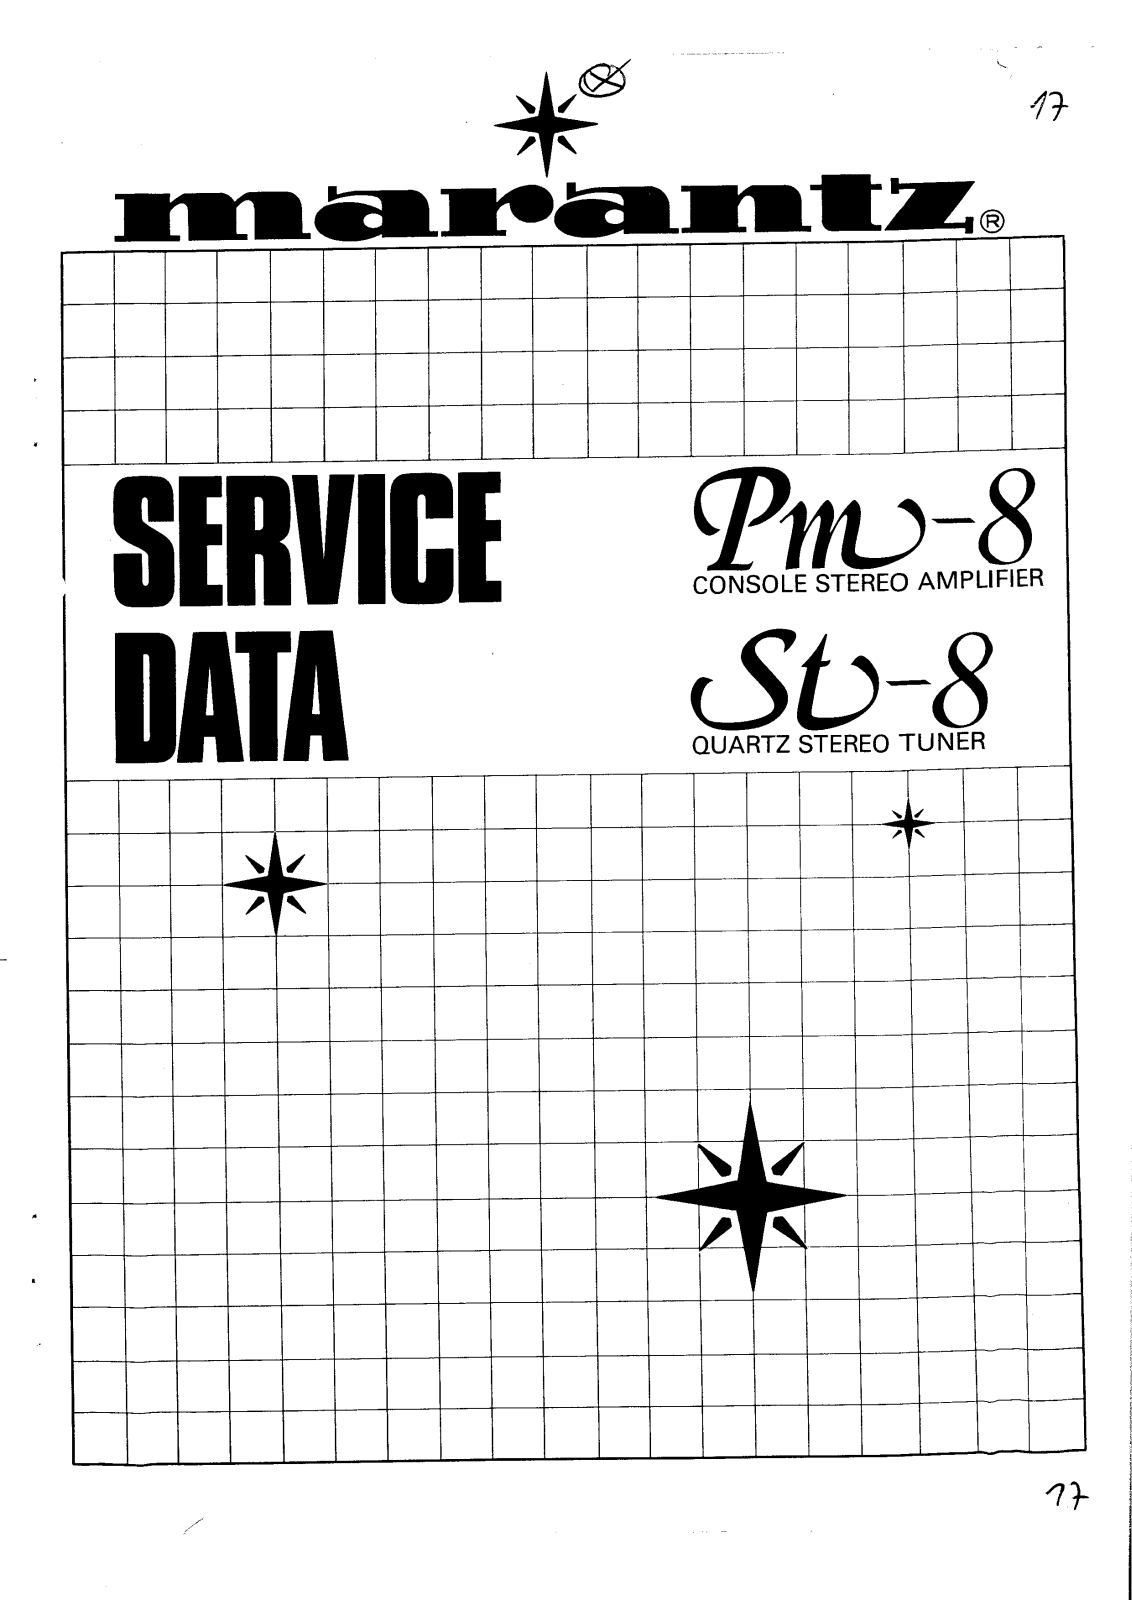 Marantz ST-8, PM-8 Service Manual